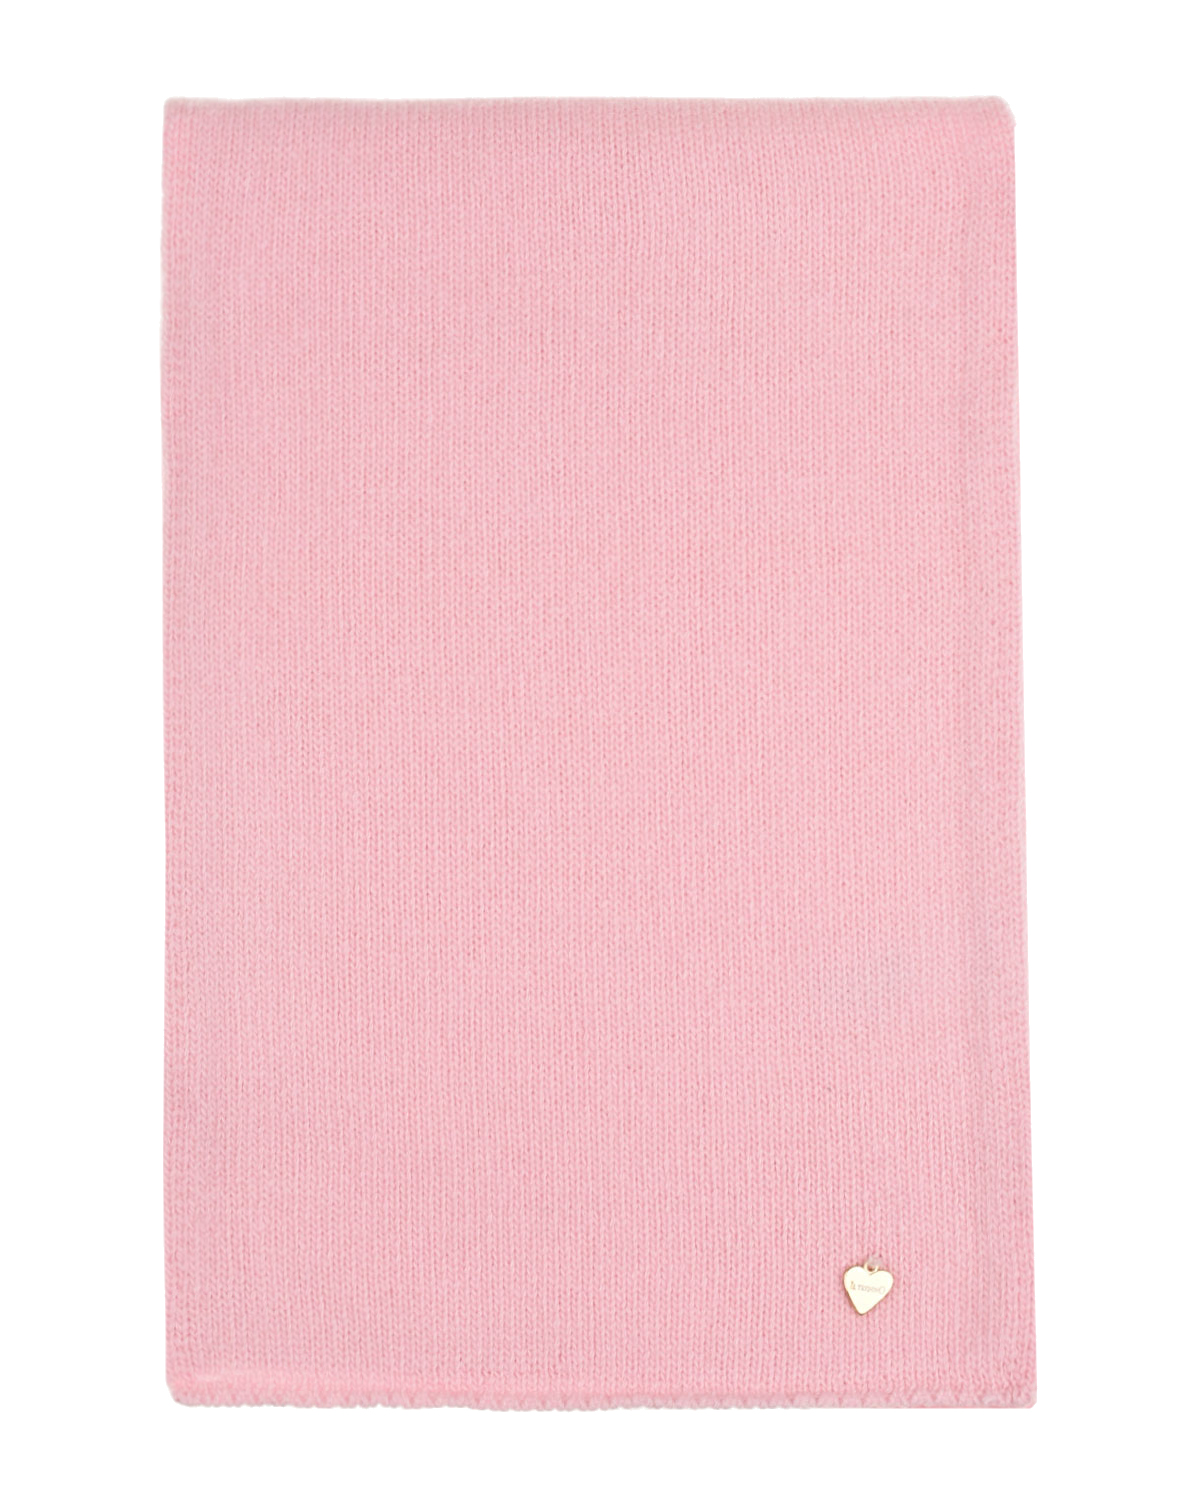 Розовый шарф из шерсти и кашемира Il Trenino детский, размер unica - фото 2